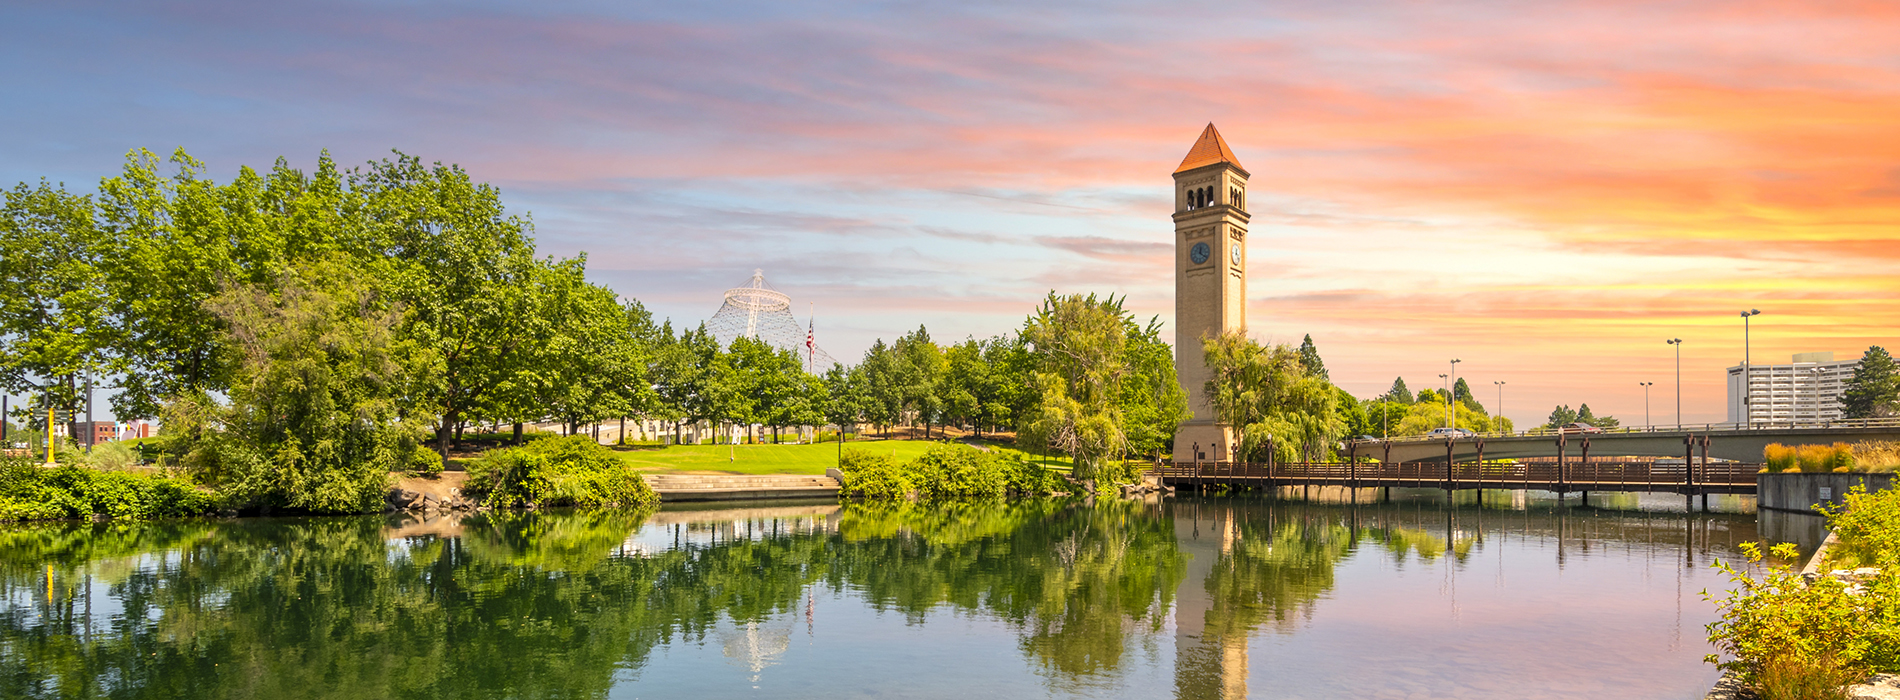 The Spokane Clock Tower in Spokane, Washington